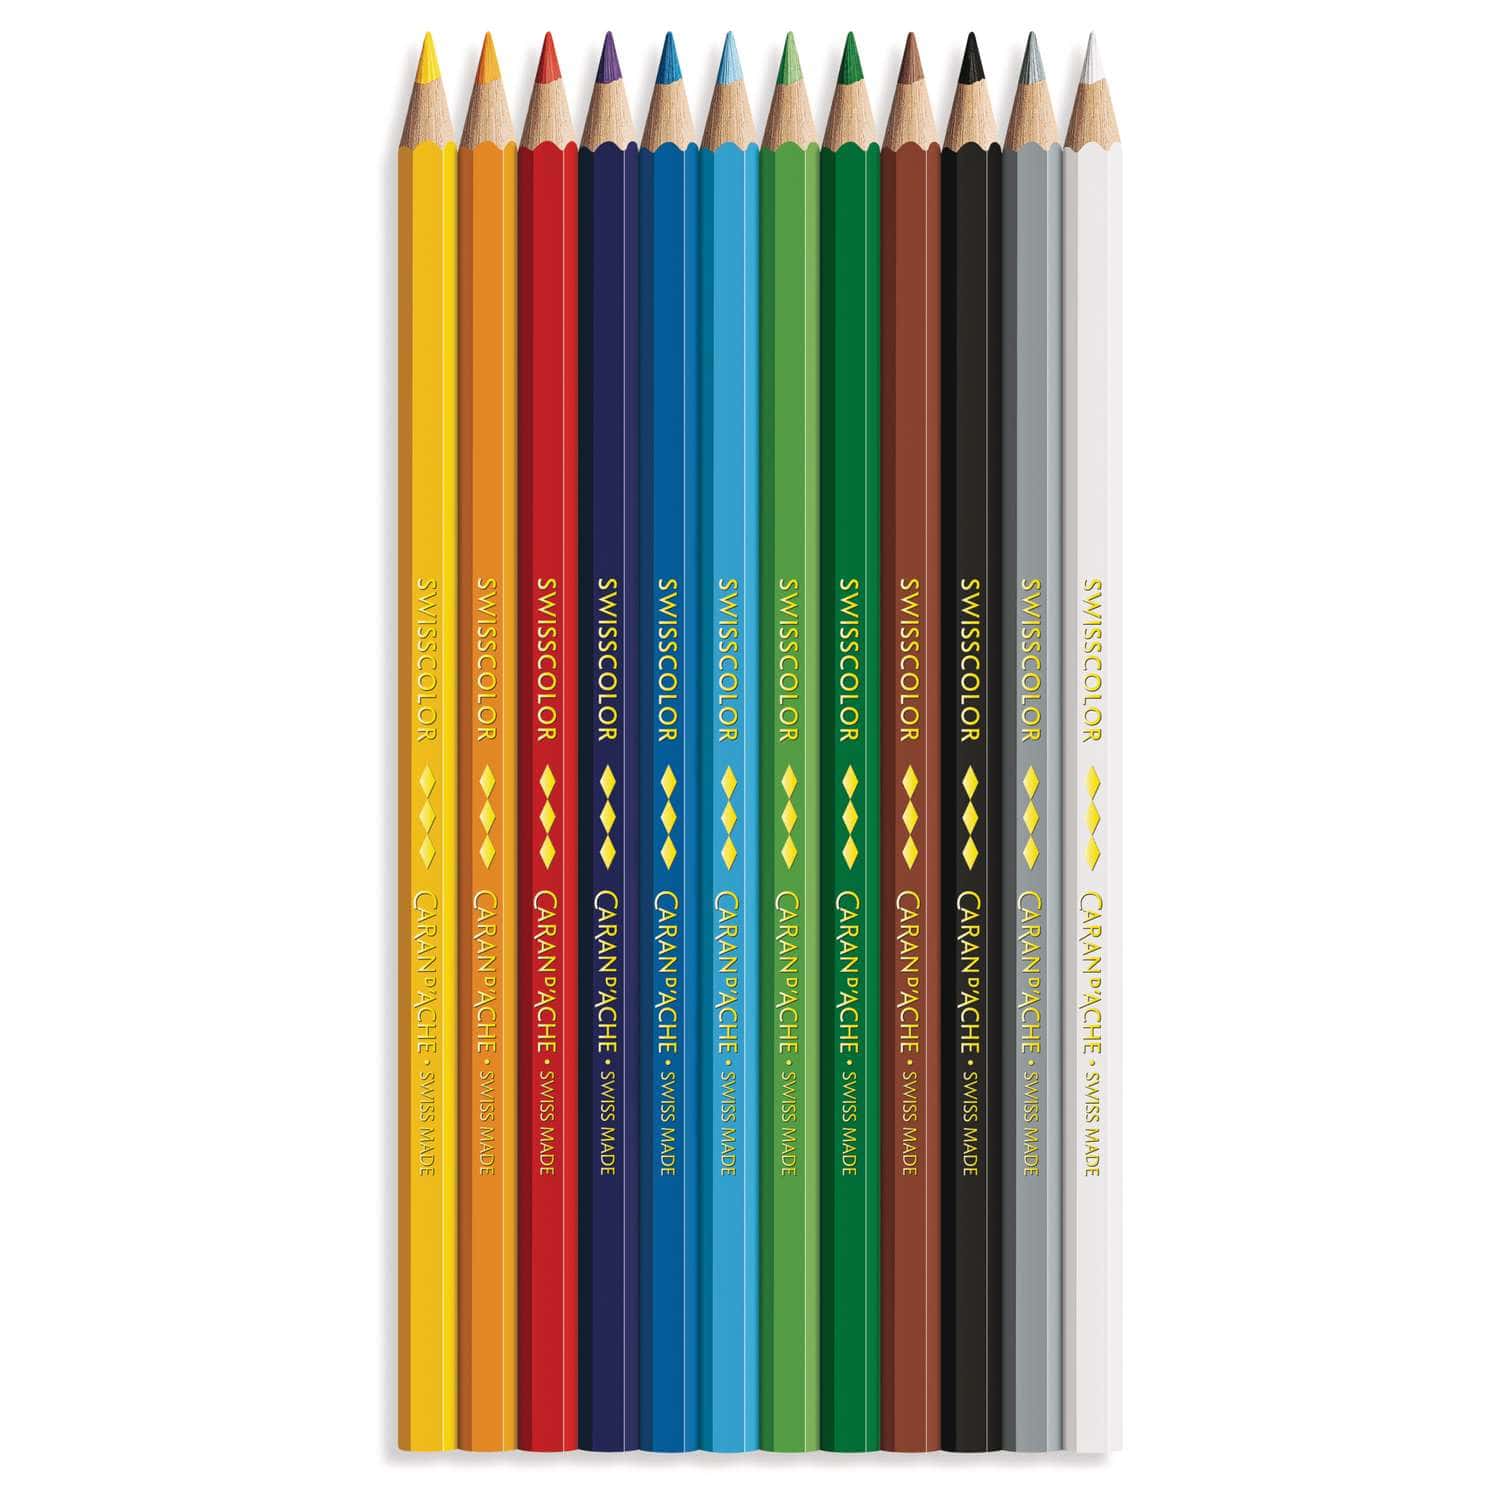 Caran d'Ache Swisscolor 12 matite colorate - Swiss Made Direct